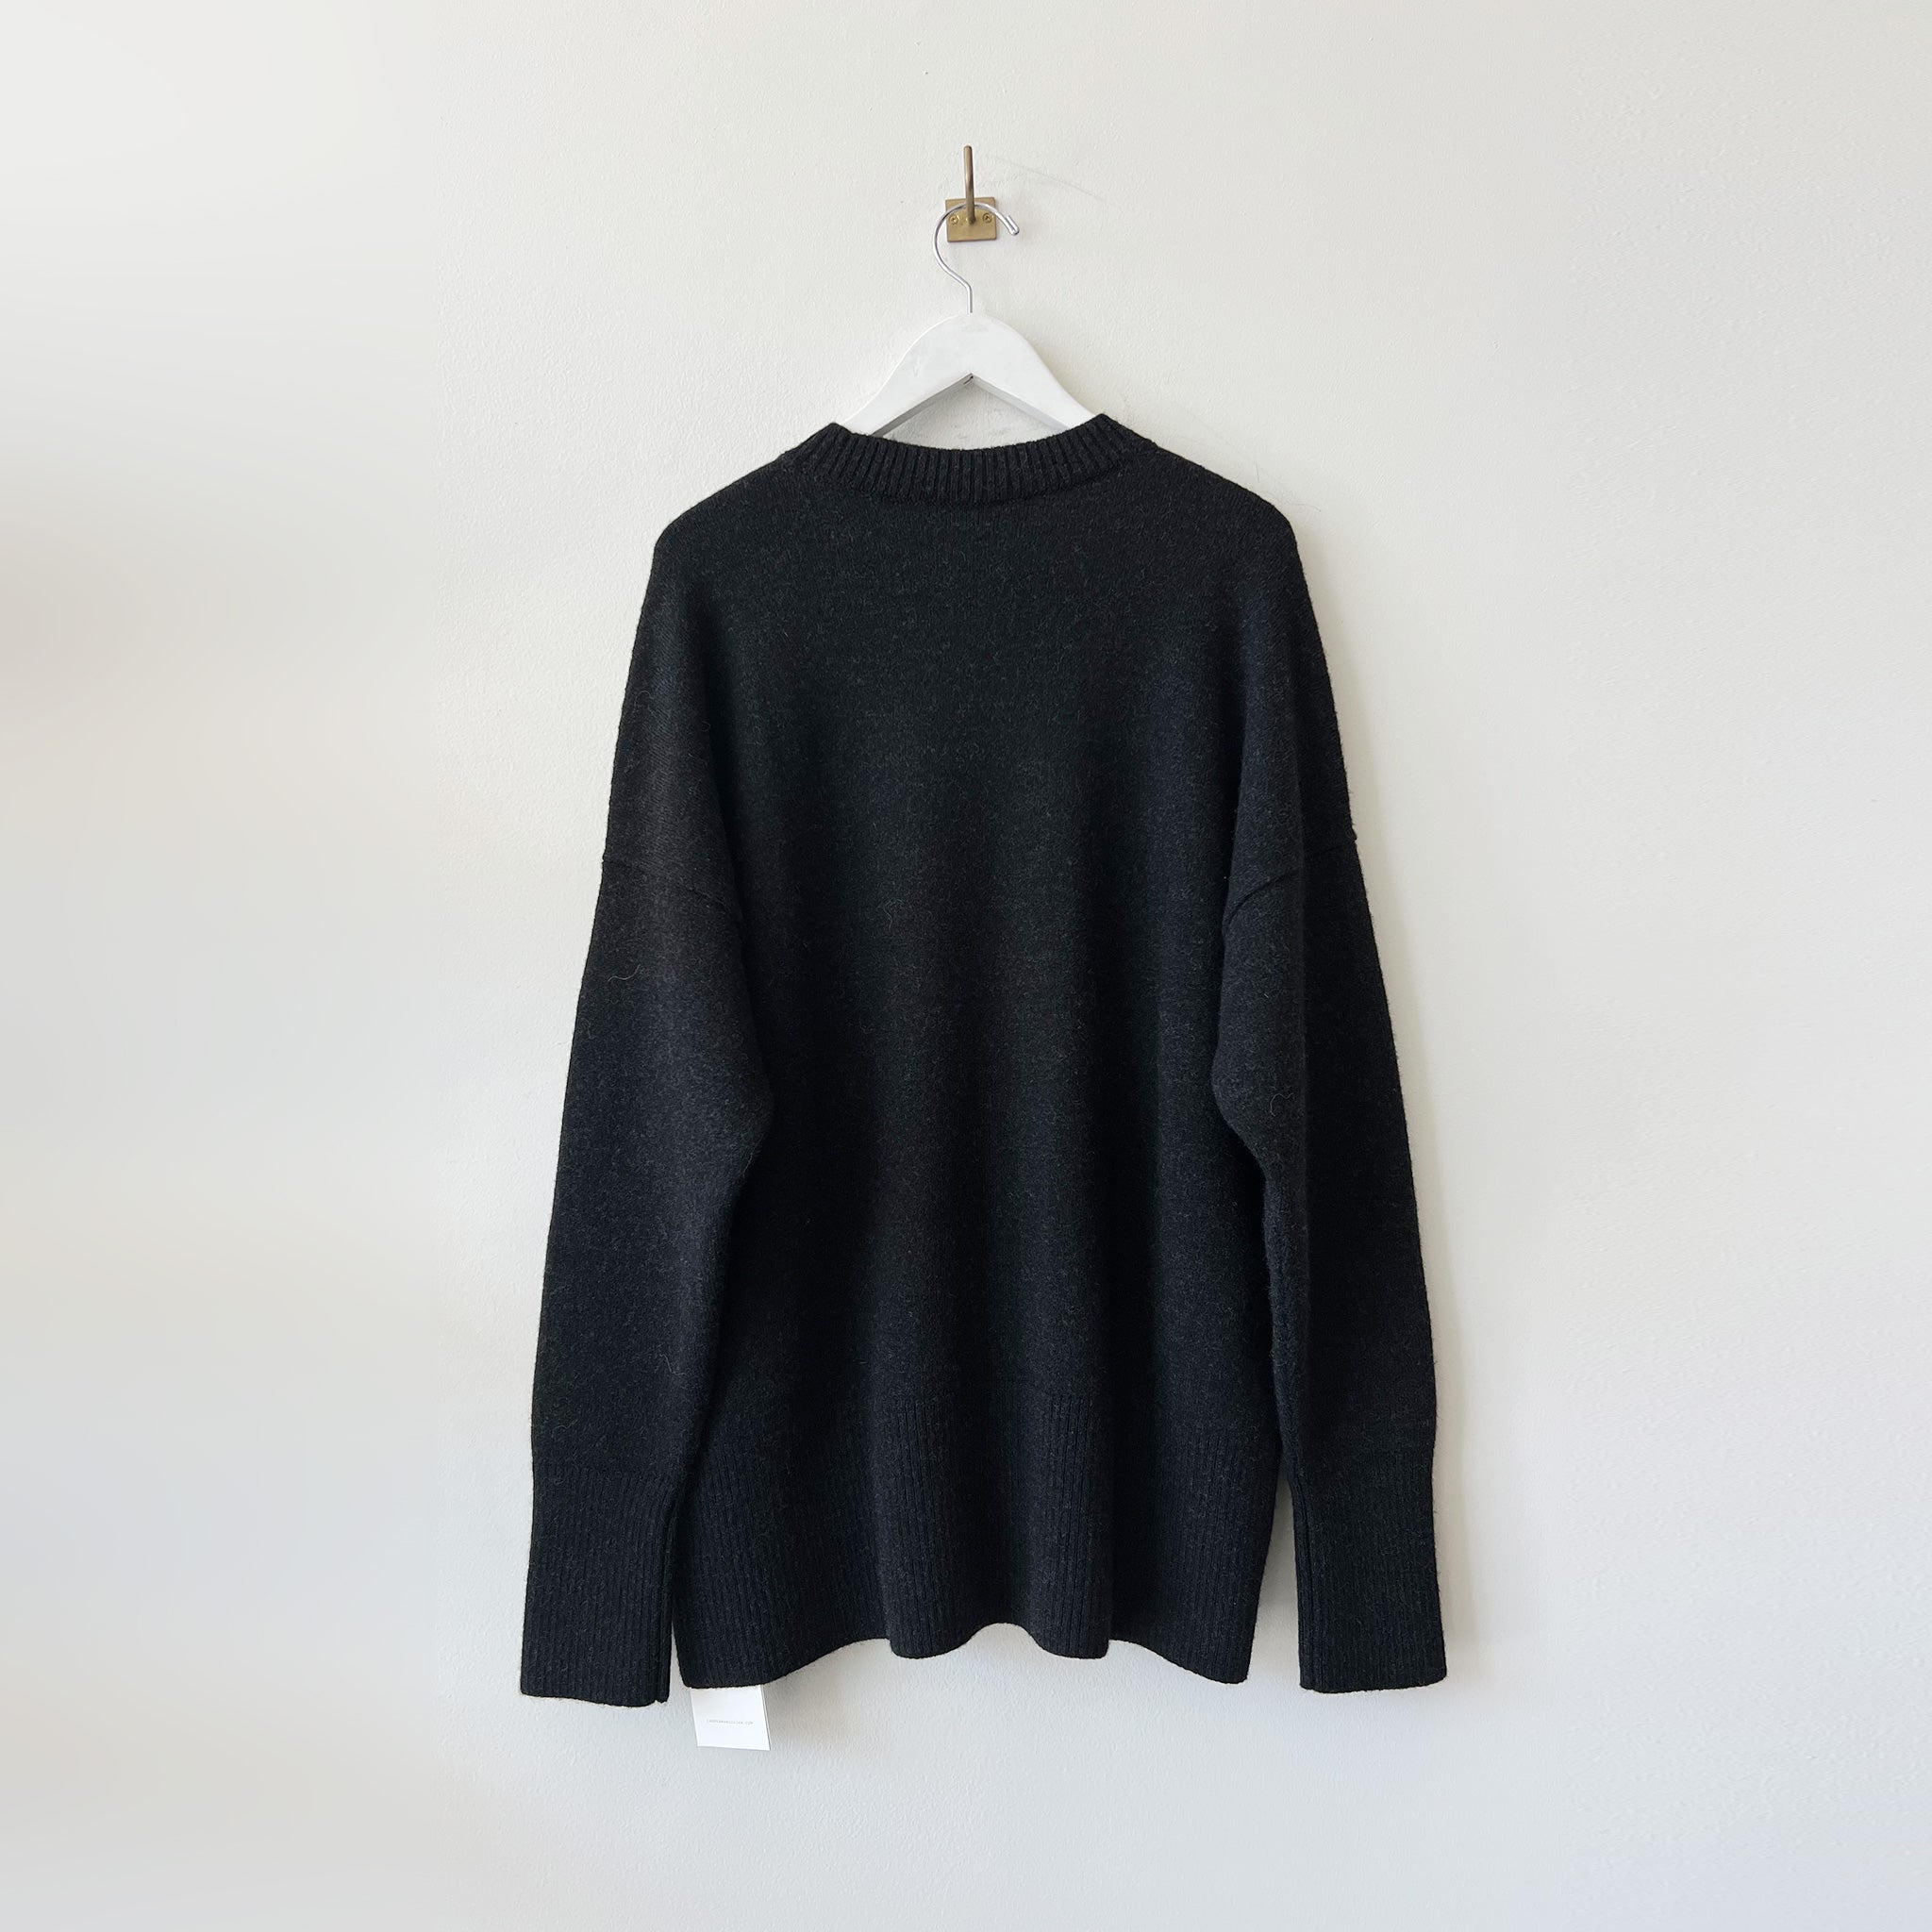 Oversized black melange crewneck sweater with long sleeves - back viwe.